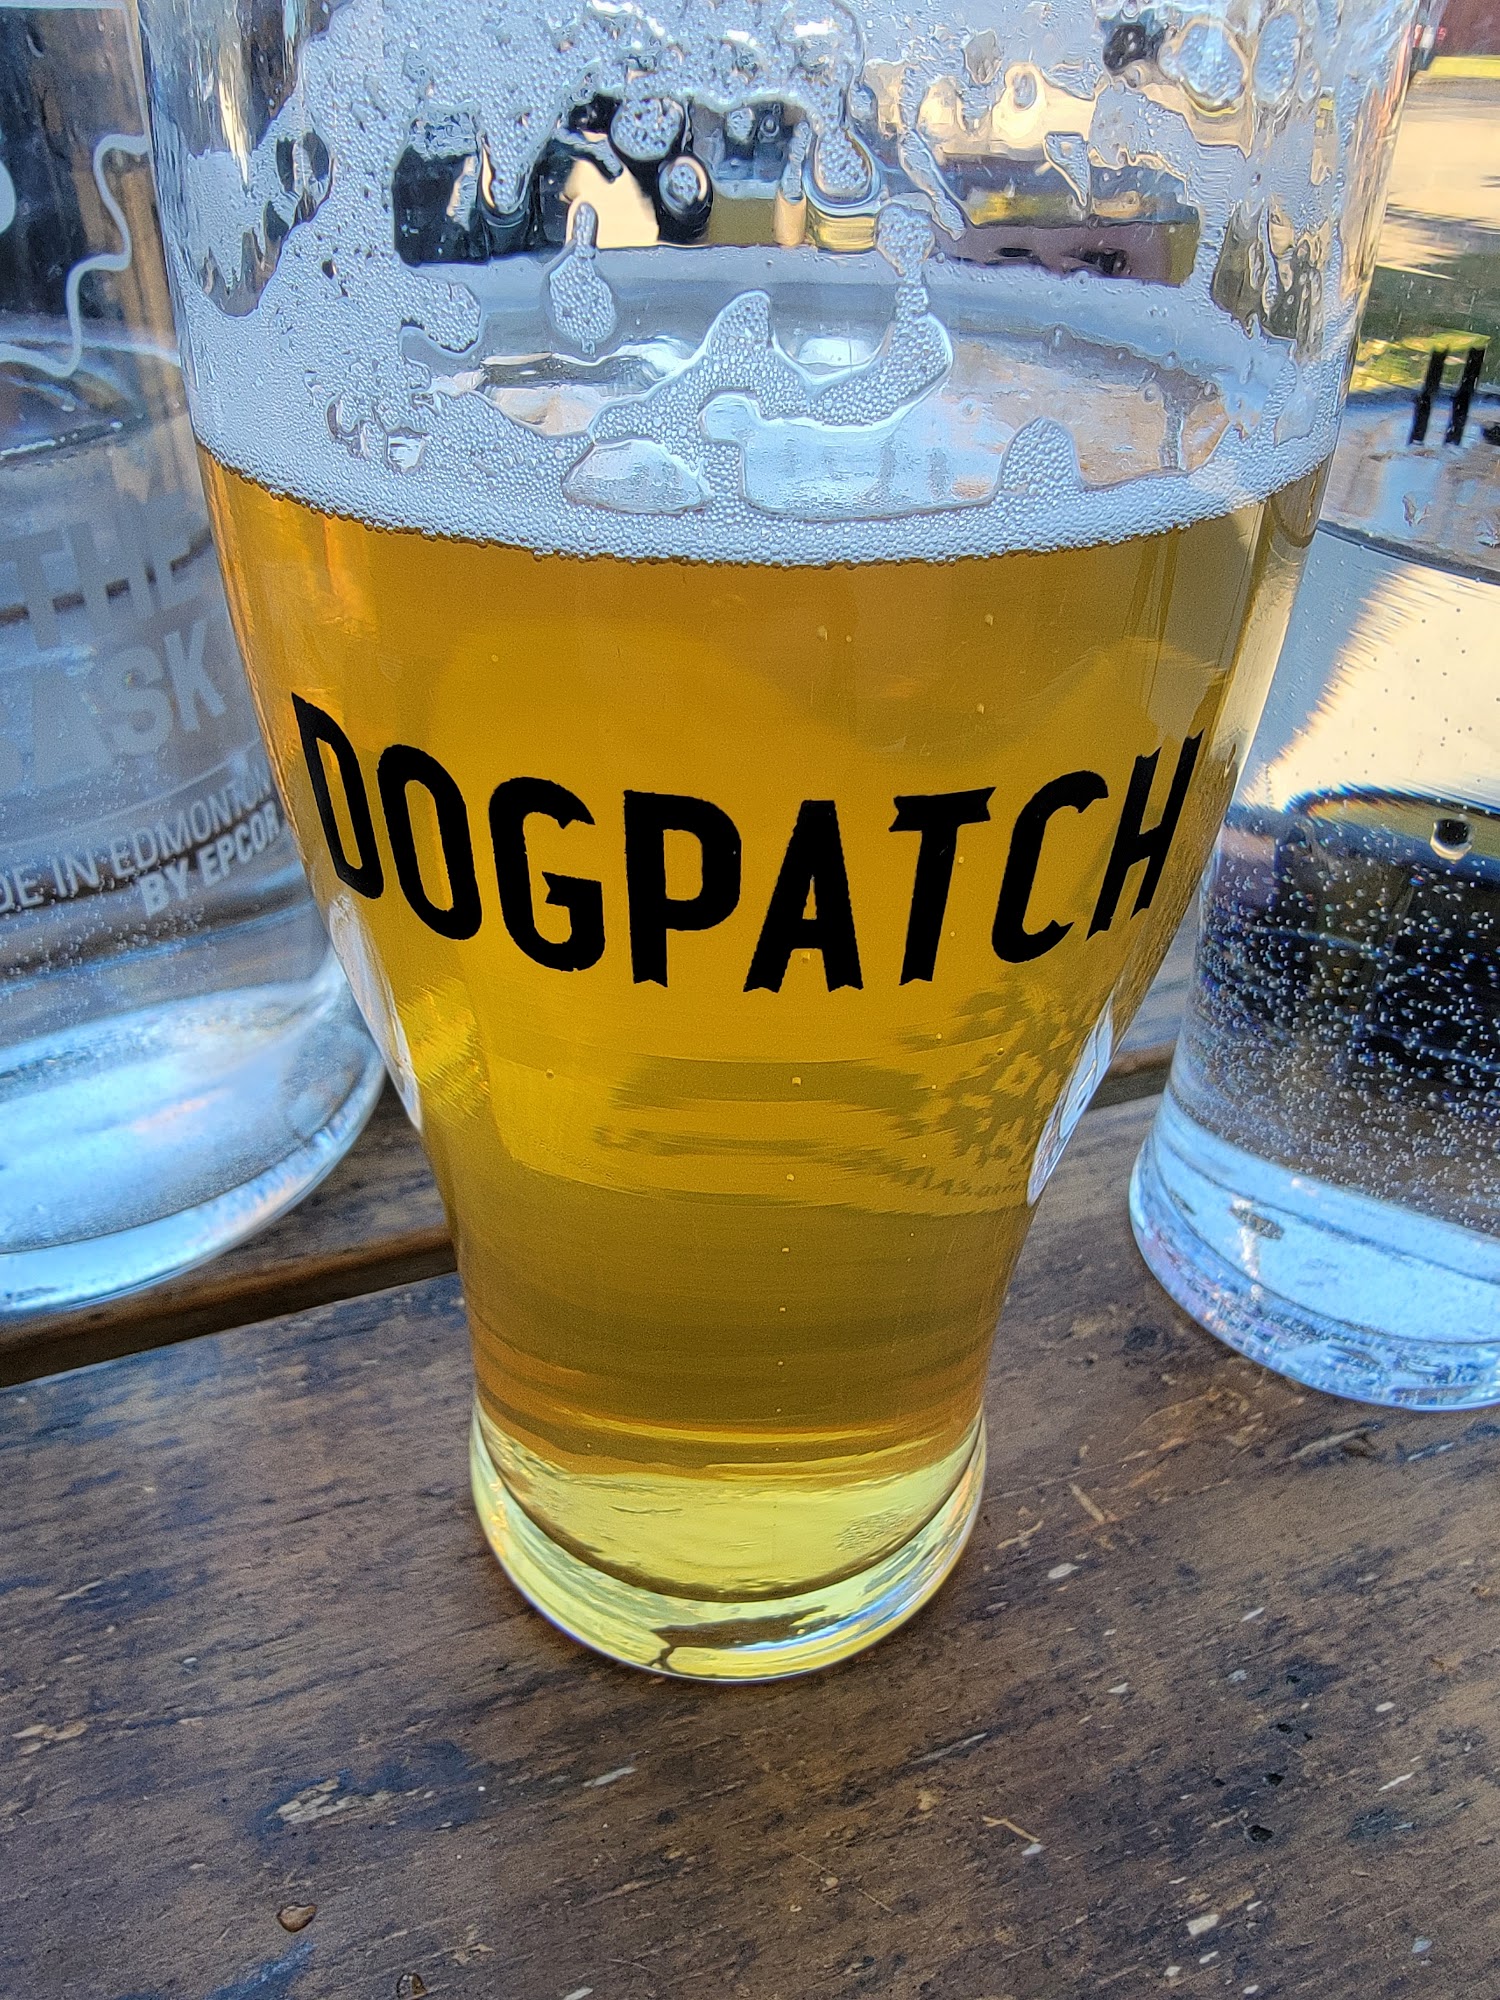 Dogpatch